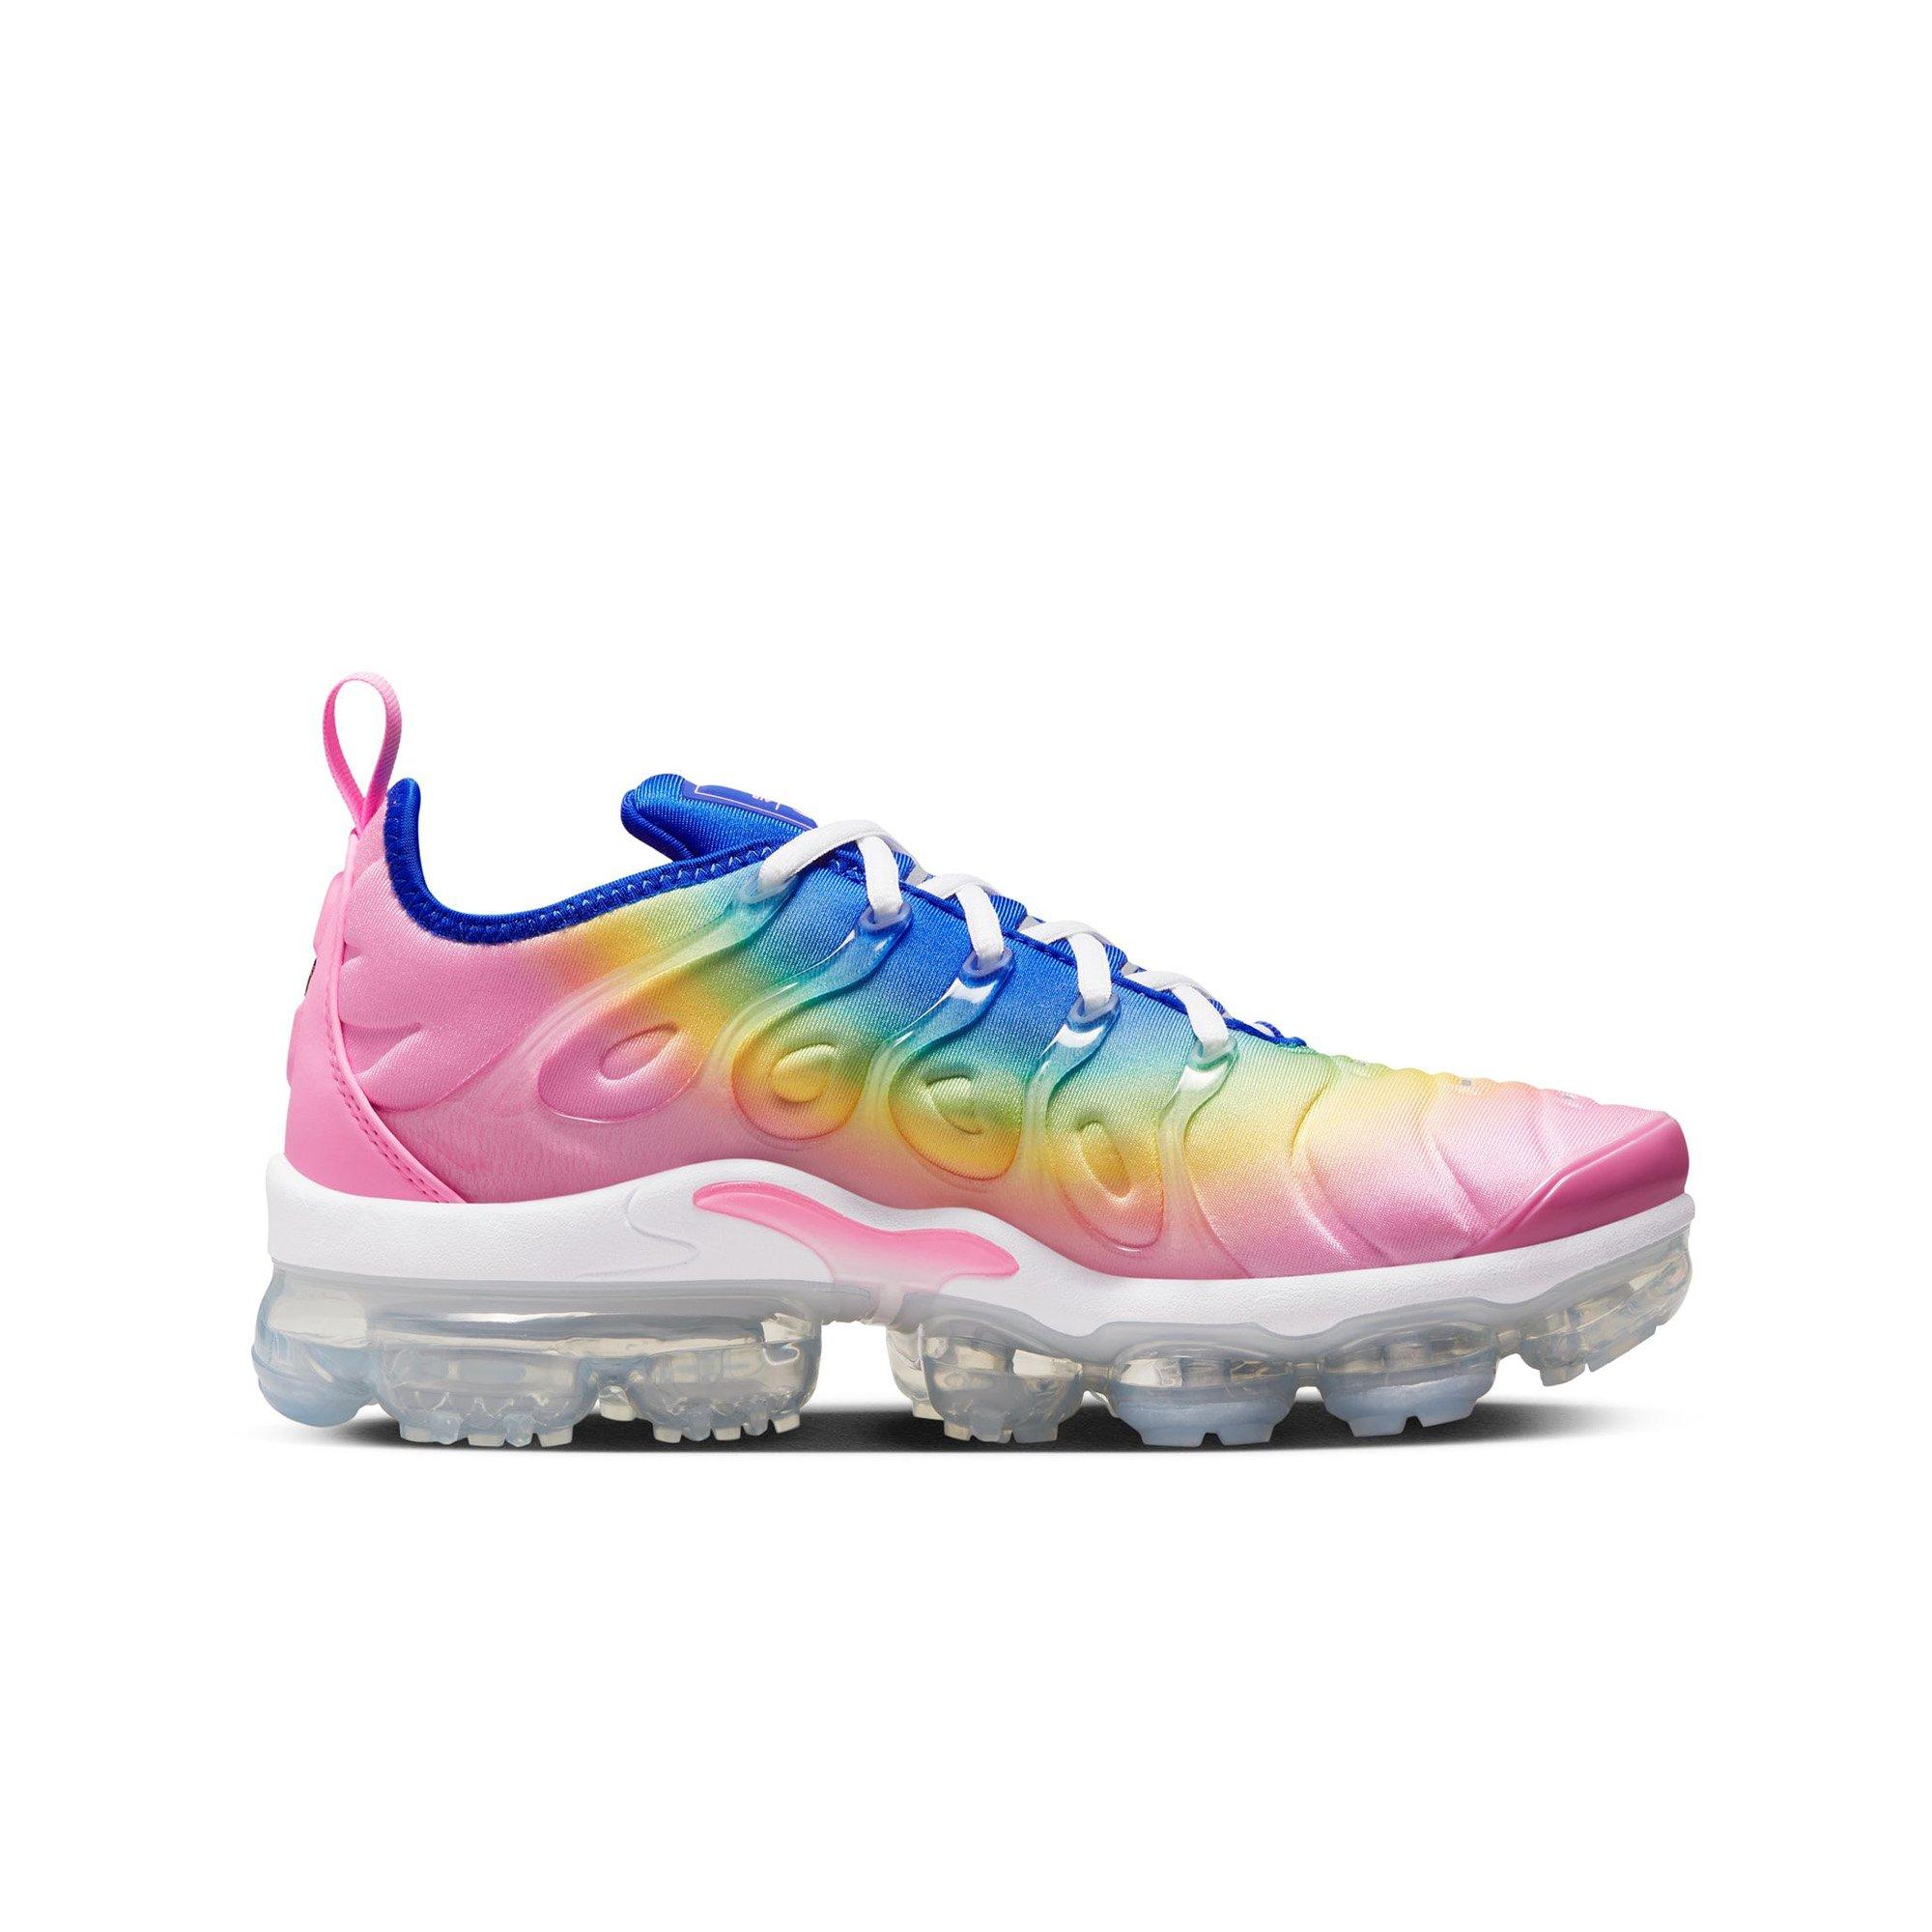 Nike VaporMax Plus "Pink Spell/Citron Pulse/Spring Green" Women's Shoe